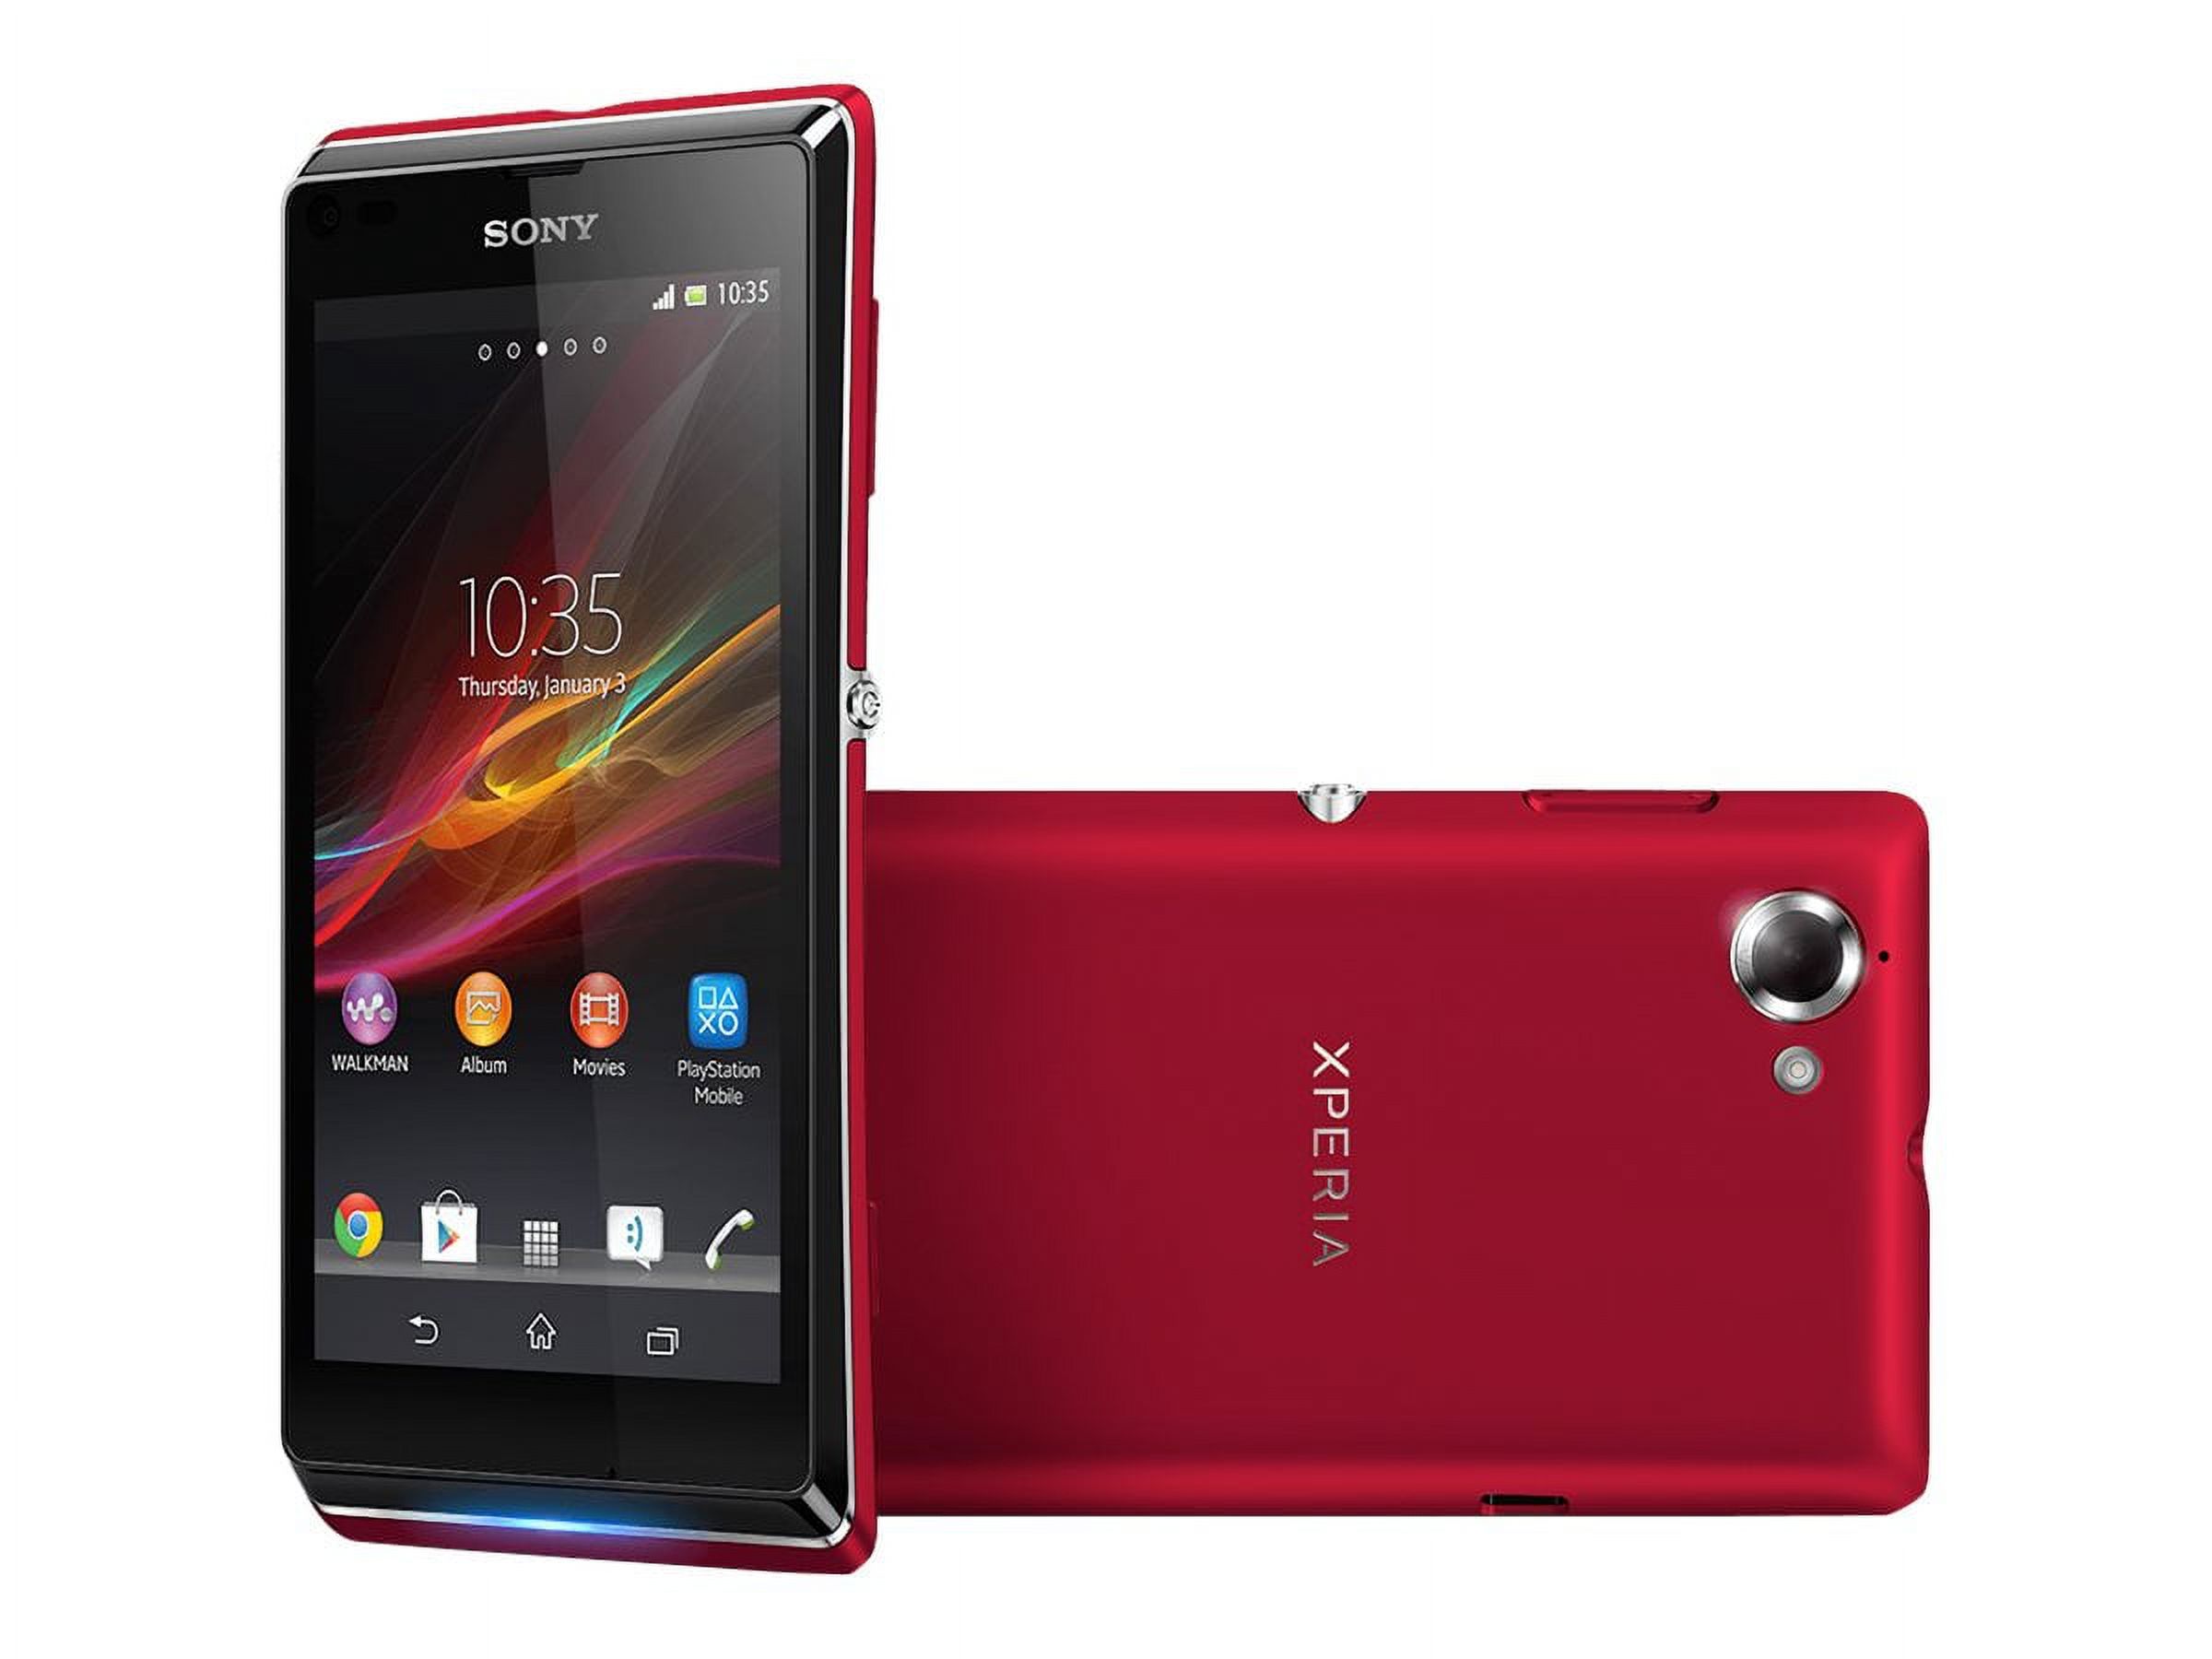 Sony XPERIA L - 3G smartphone - RAM 1 GB / Internal Memory 8 GB - microSD slot - 4.3" - 480 x 854 pixels - rear camera 8 MP - red - image 3 of 6